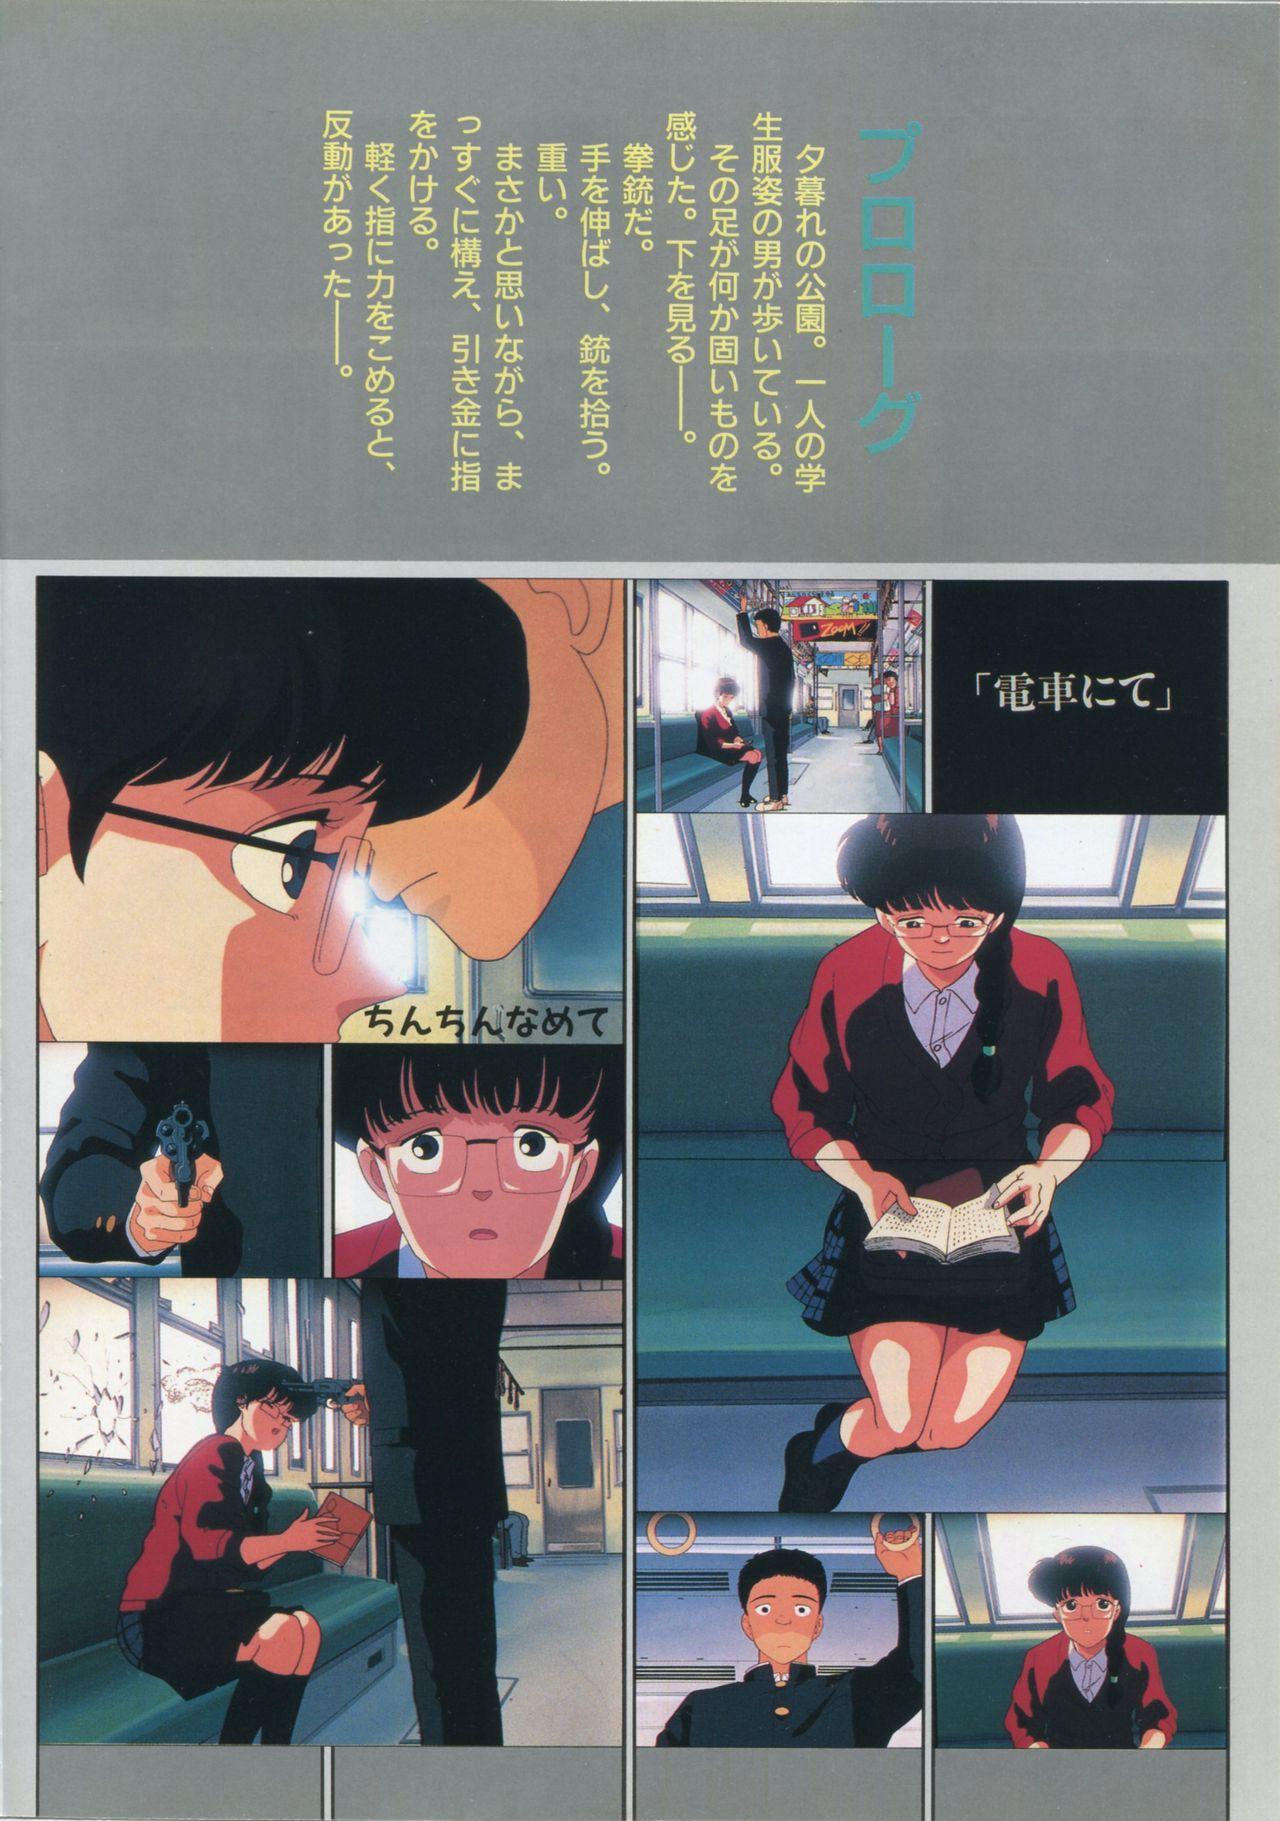 Bishoujo Anime Daizenshuu - Adult Animation Video Catalog 1991 21